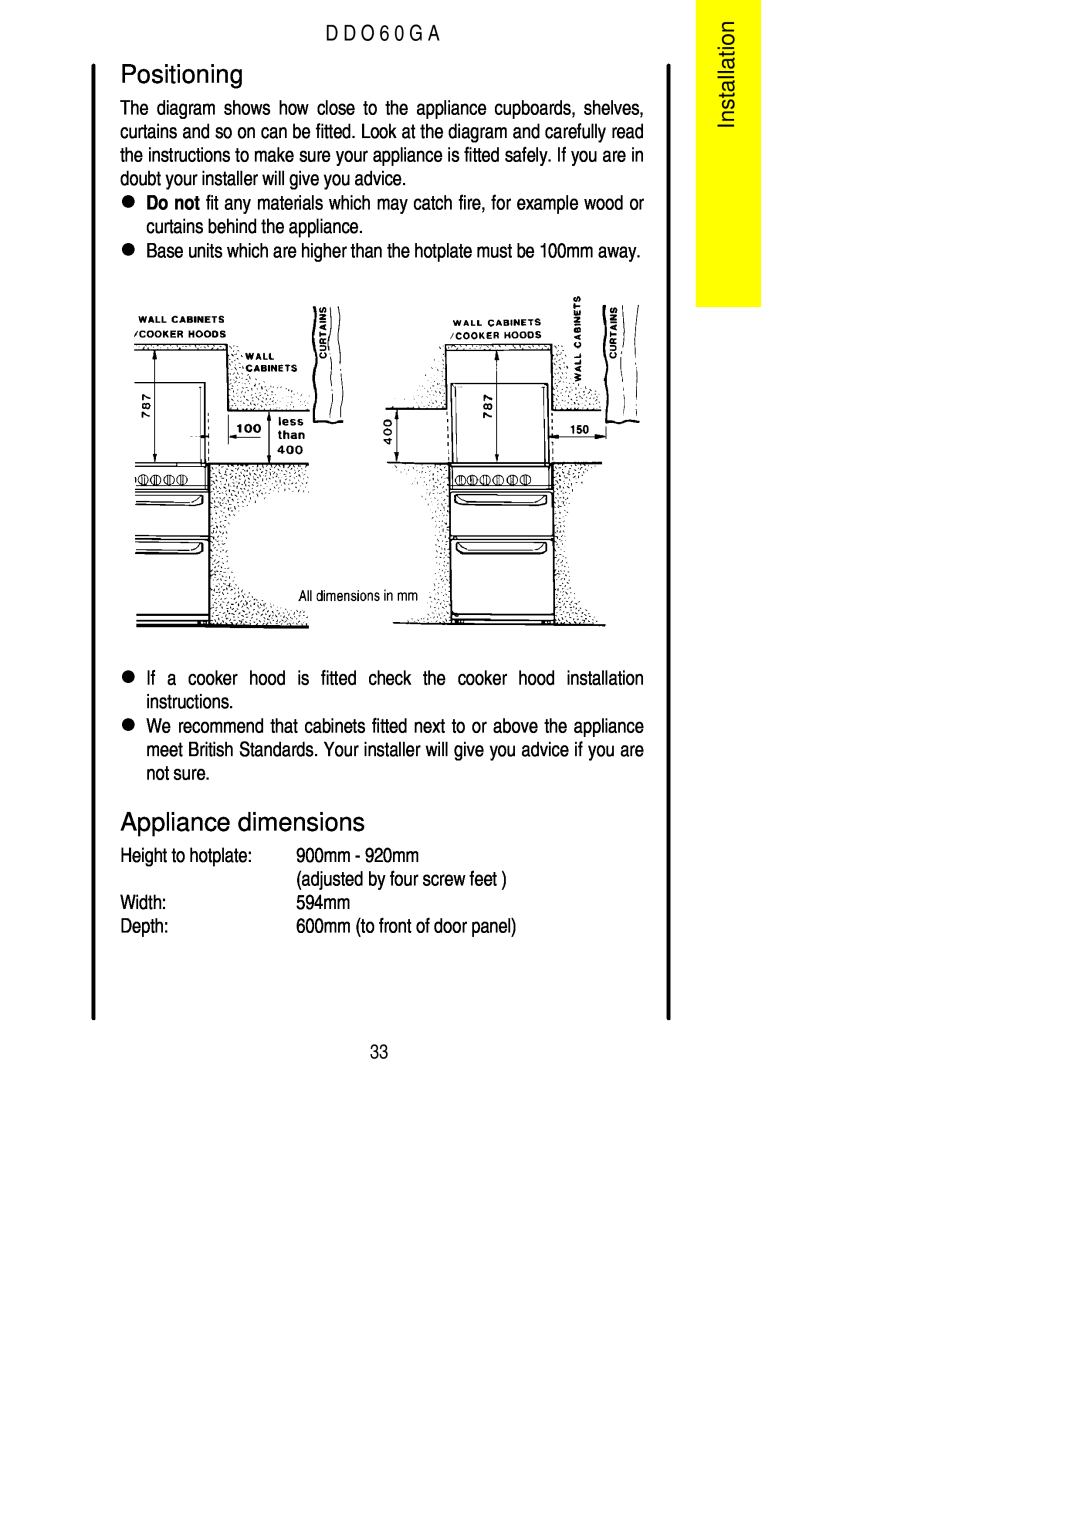 Electrolux DDO60GA manual Positioning, Appliance dimensions, Installation, D D O 6 0 G A 